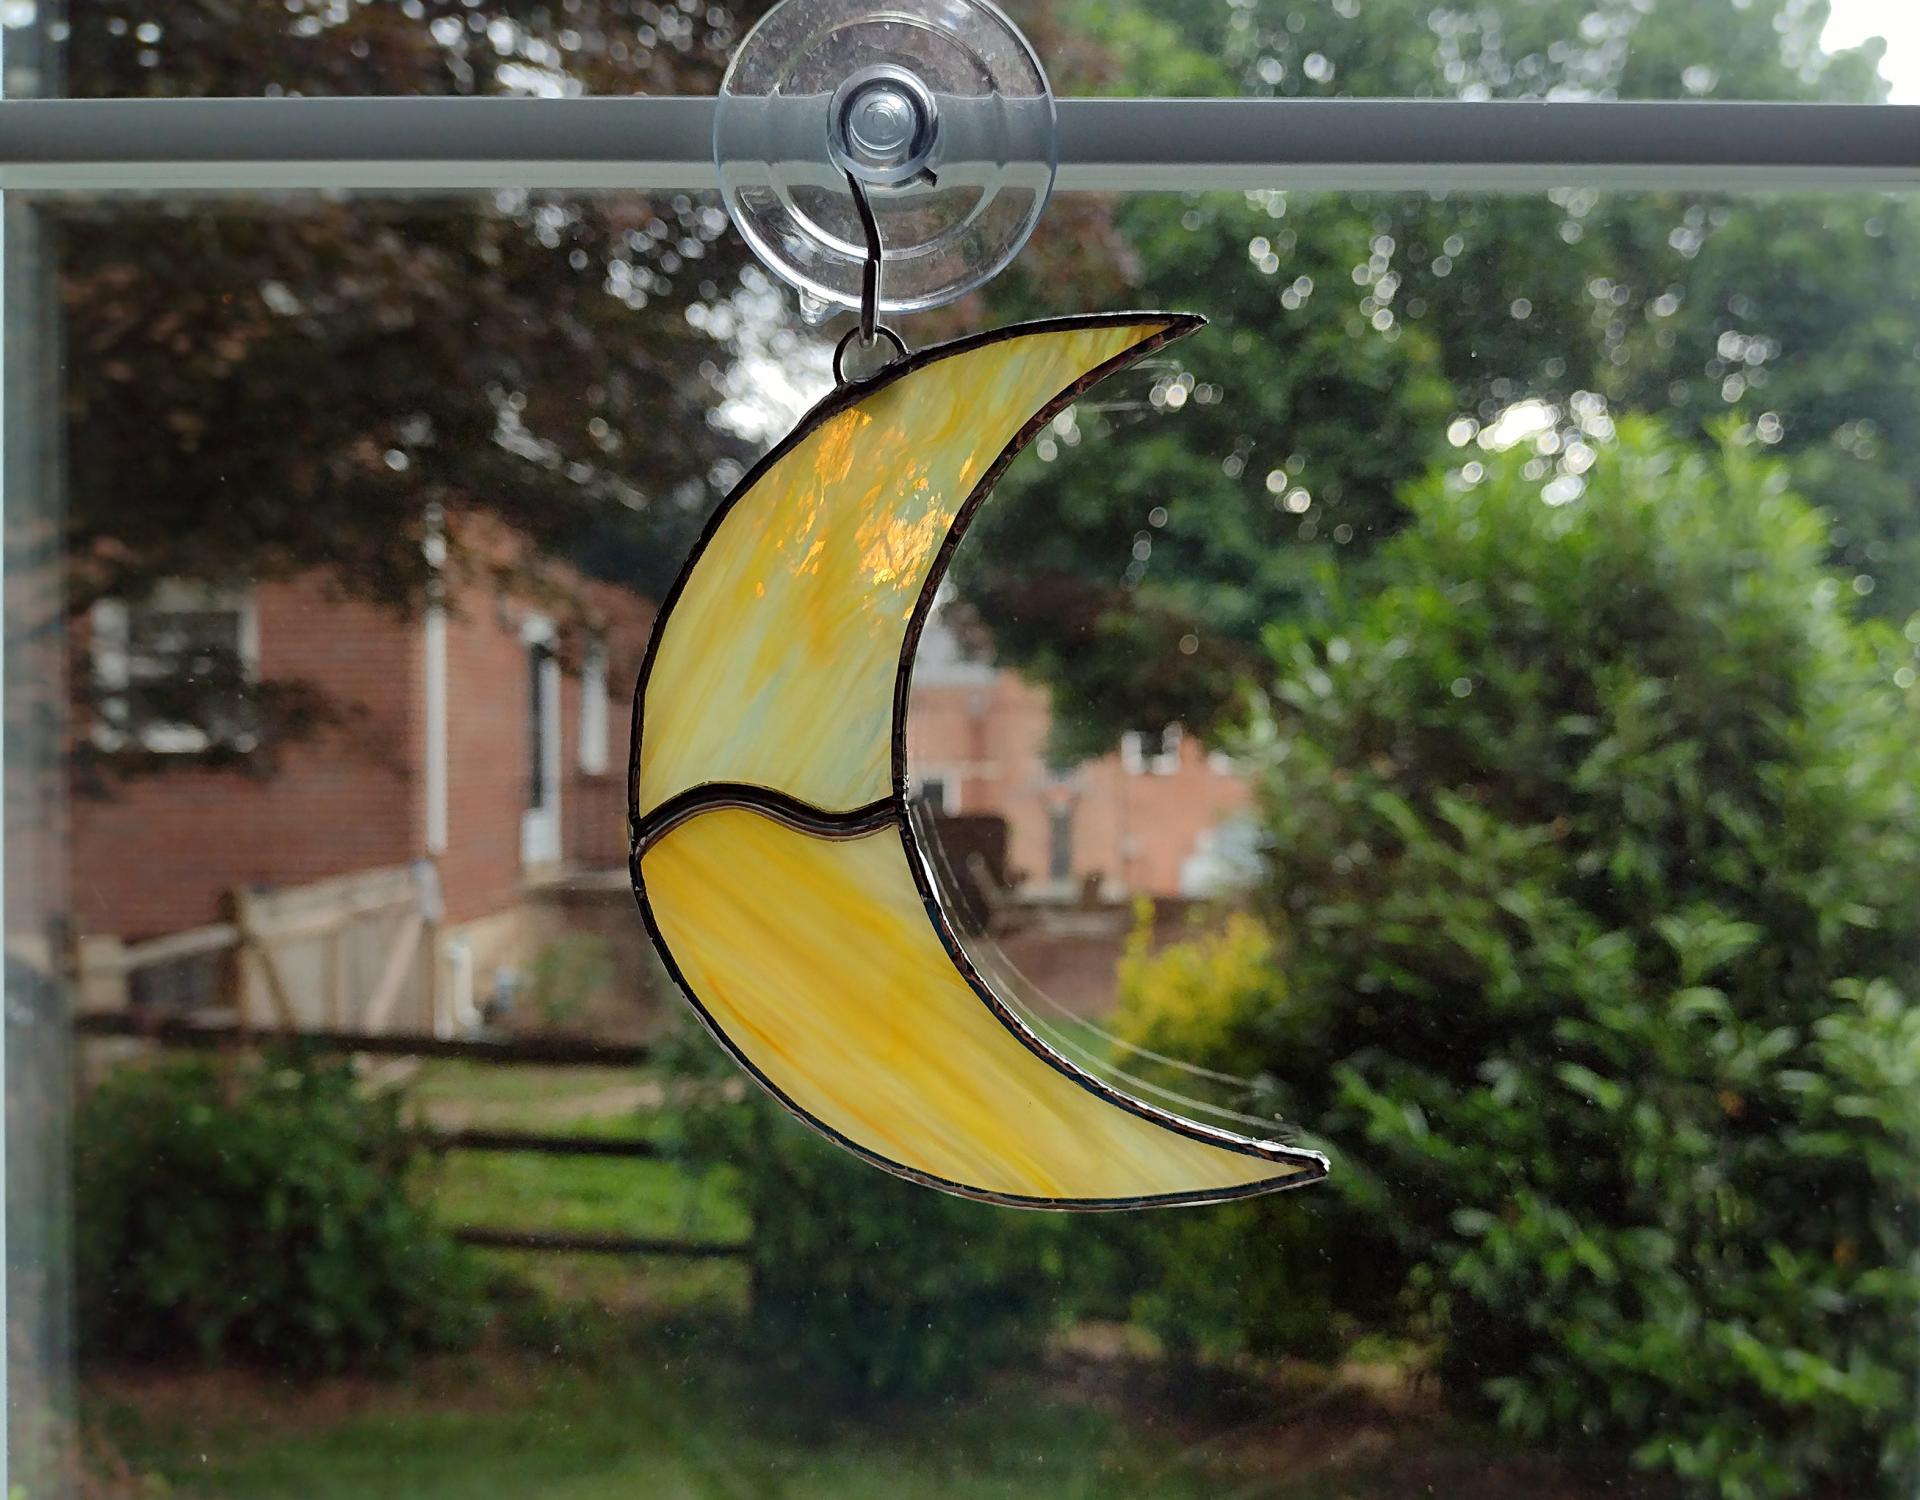 Crescent Moon Stained Glass Suncatcher, Yellow Swirled Corsica Glass